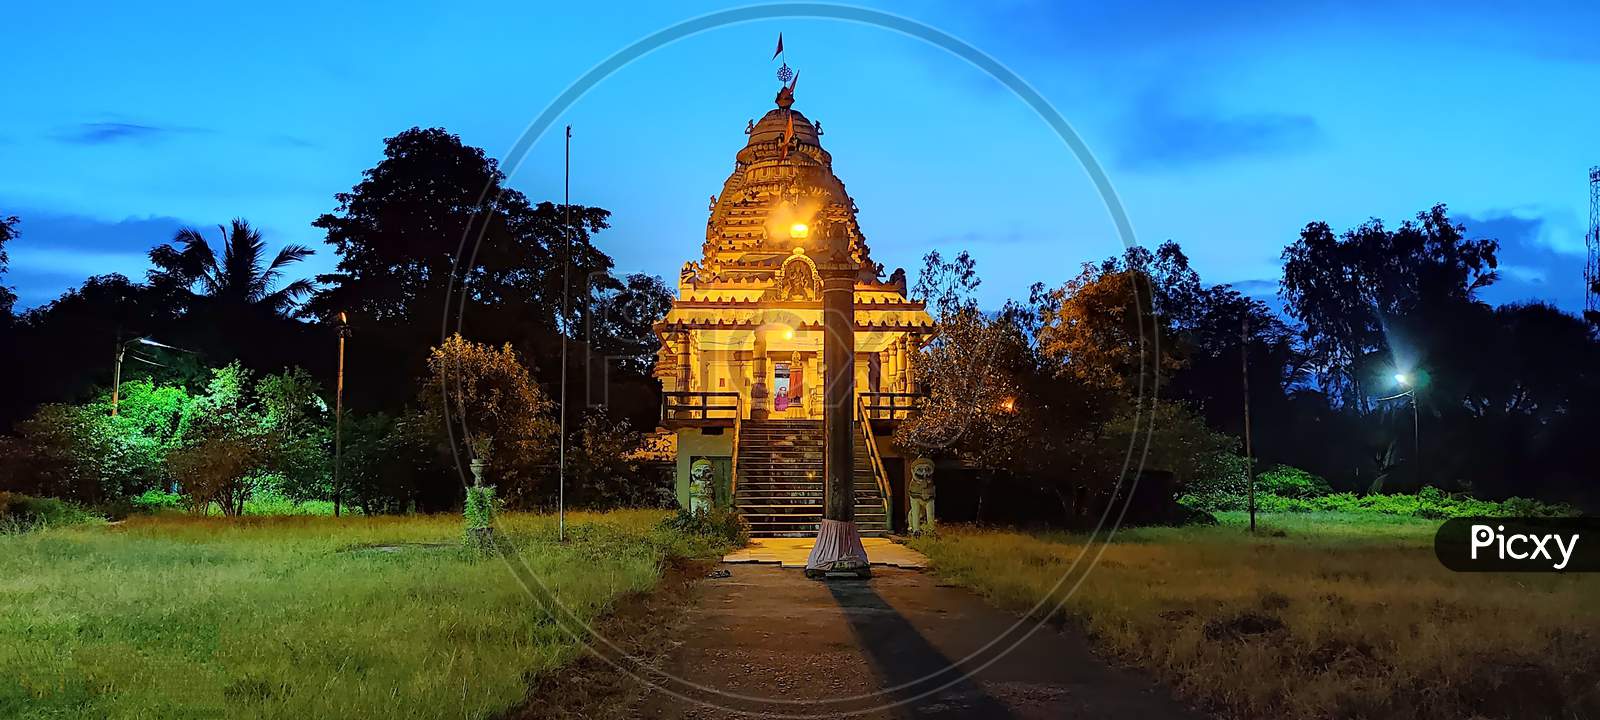 Tourist place of India, odisha. Lord jagannath temple